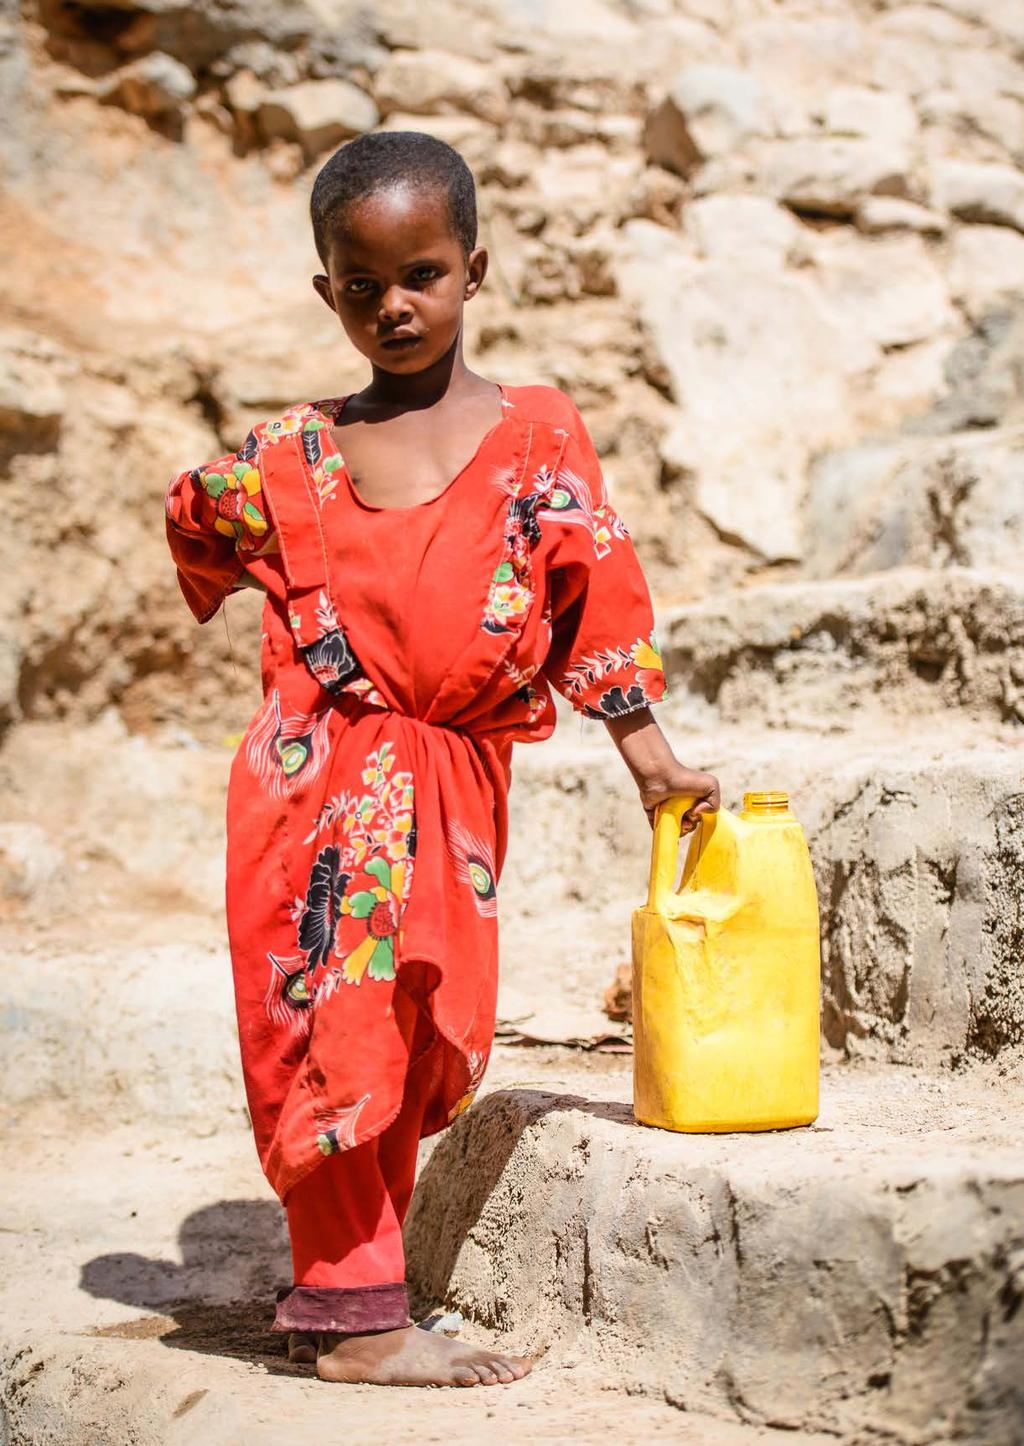 Shamice bor i Gawsawayne, en liten by i Sanaagregionen i Somaliland.